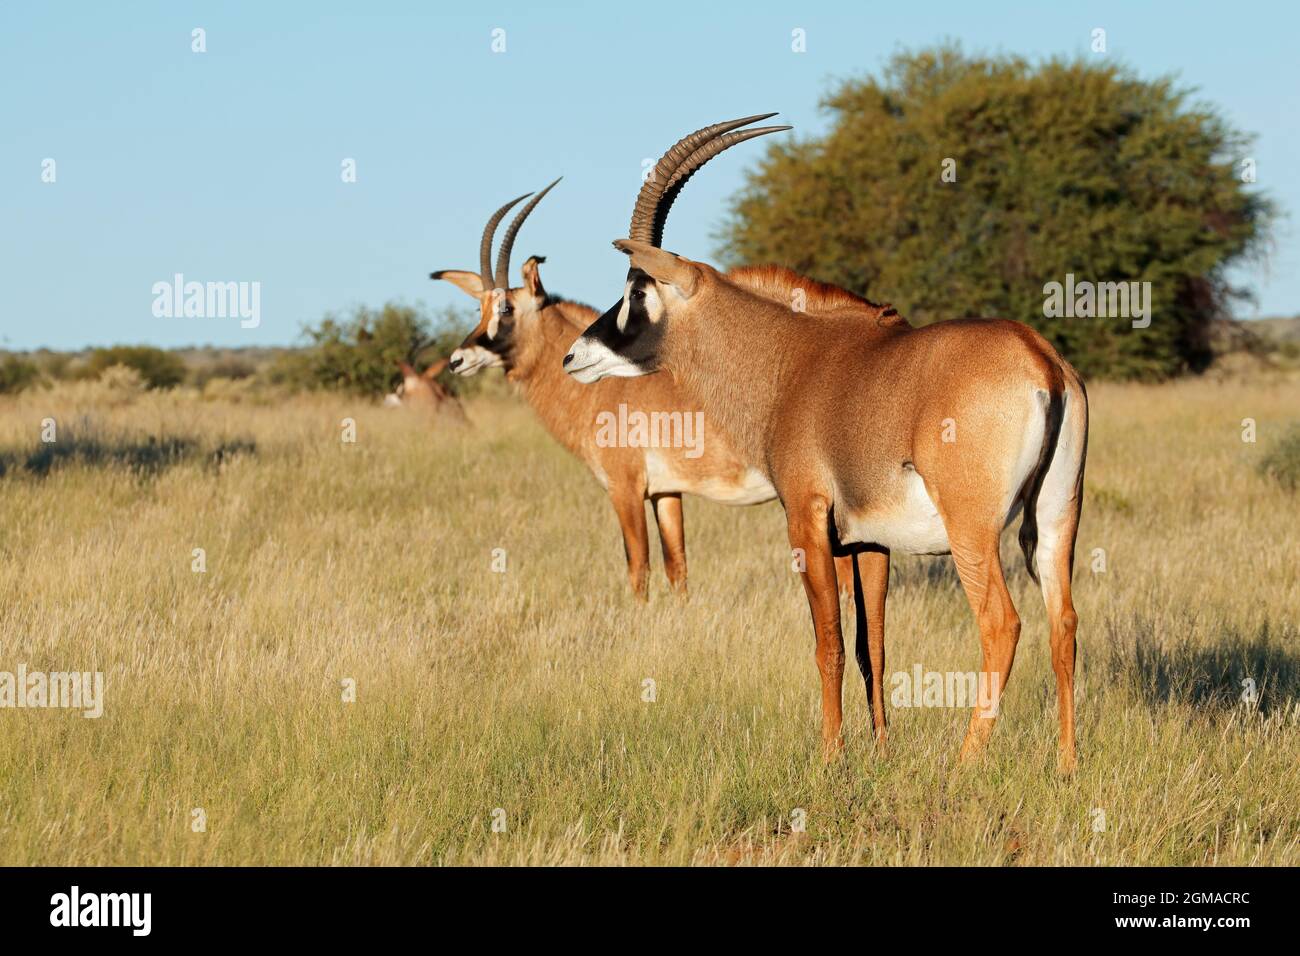 Rare roan antelopes (Hippotragus equinus) in natural habitat, South Africa Stock Photo